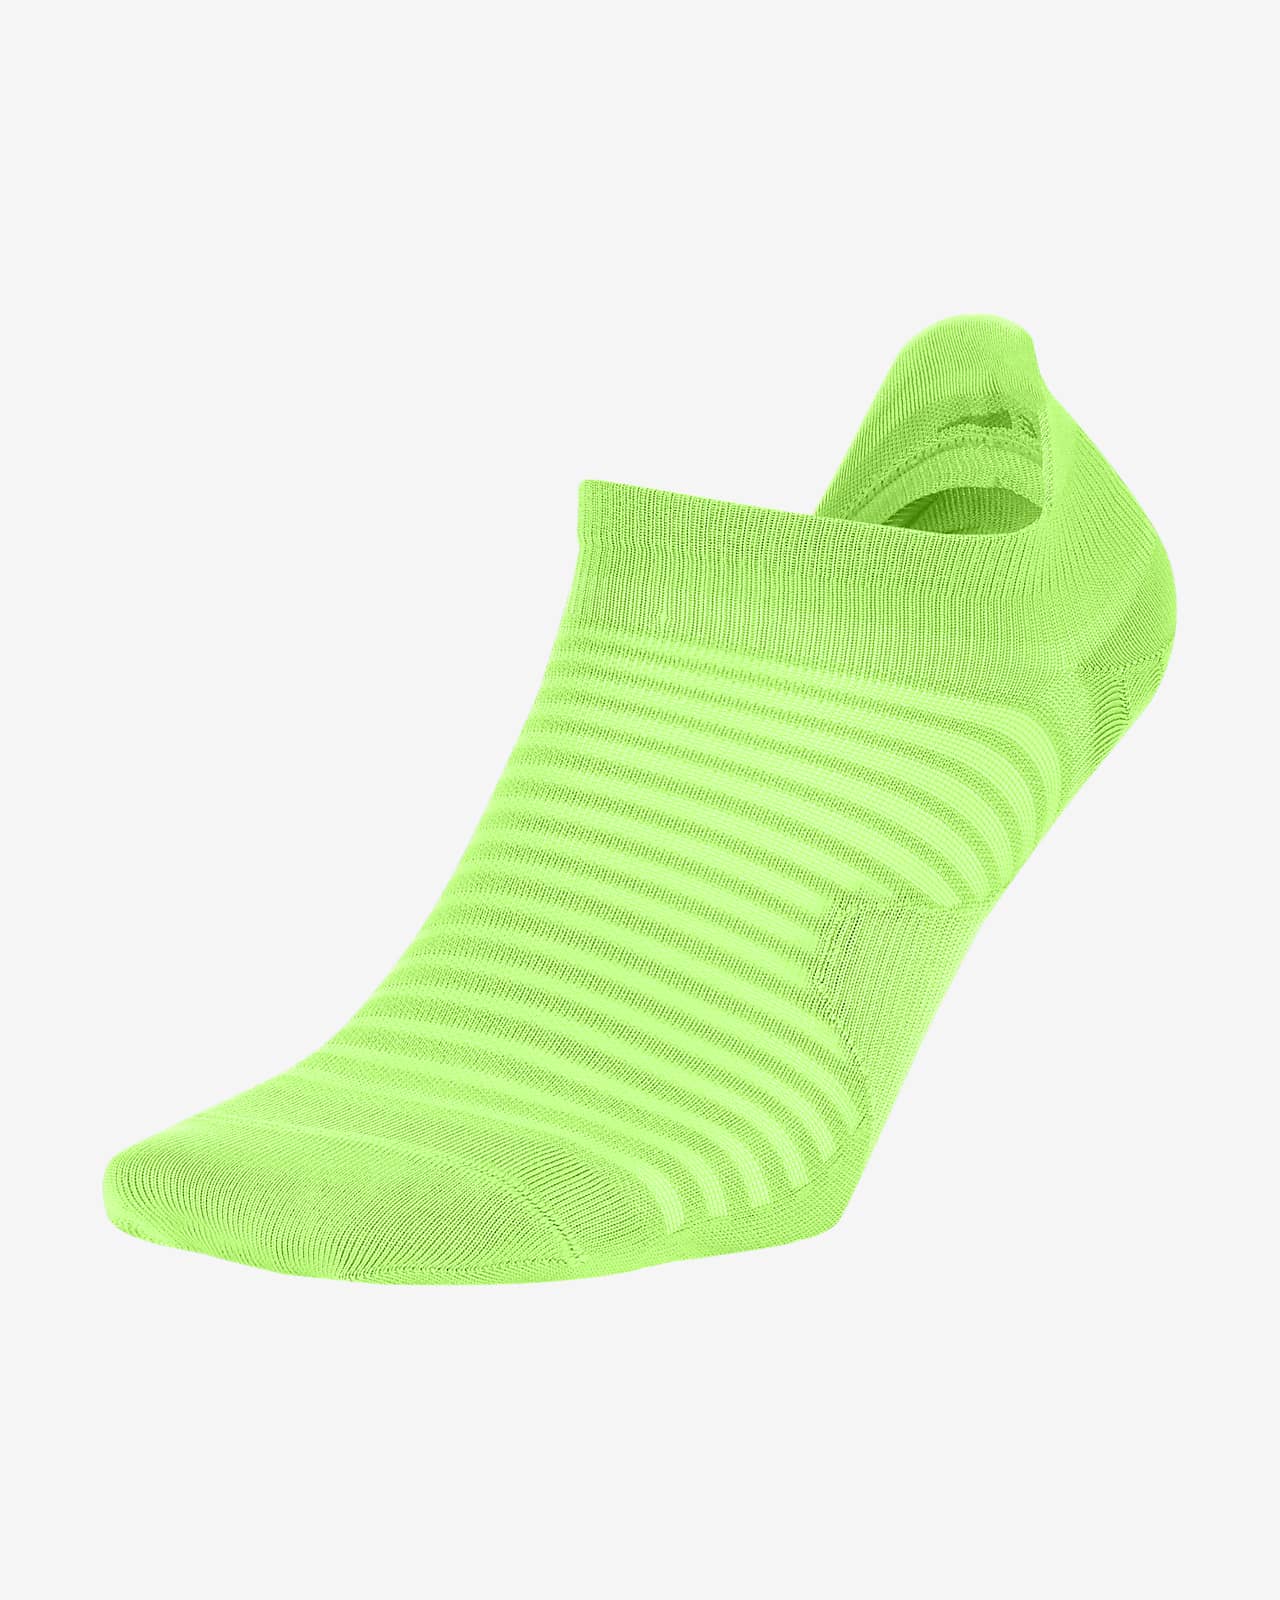 nike lightweight performance socks